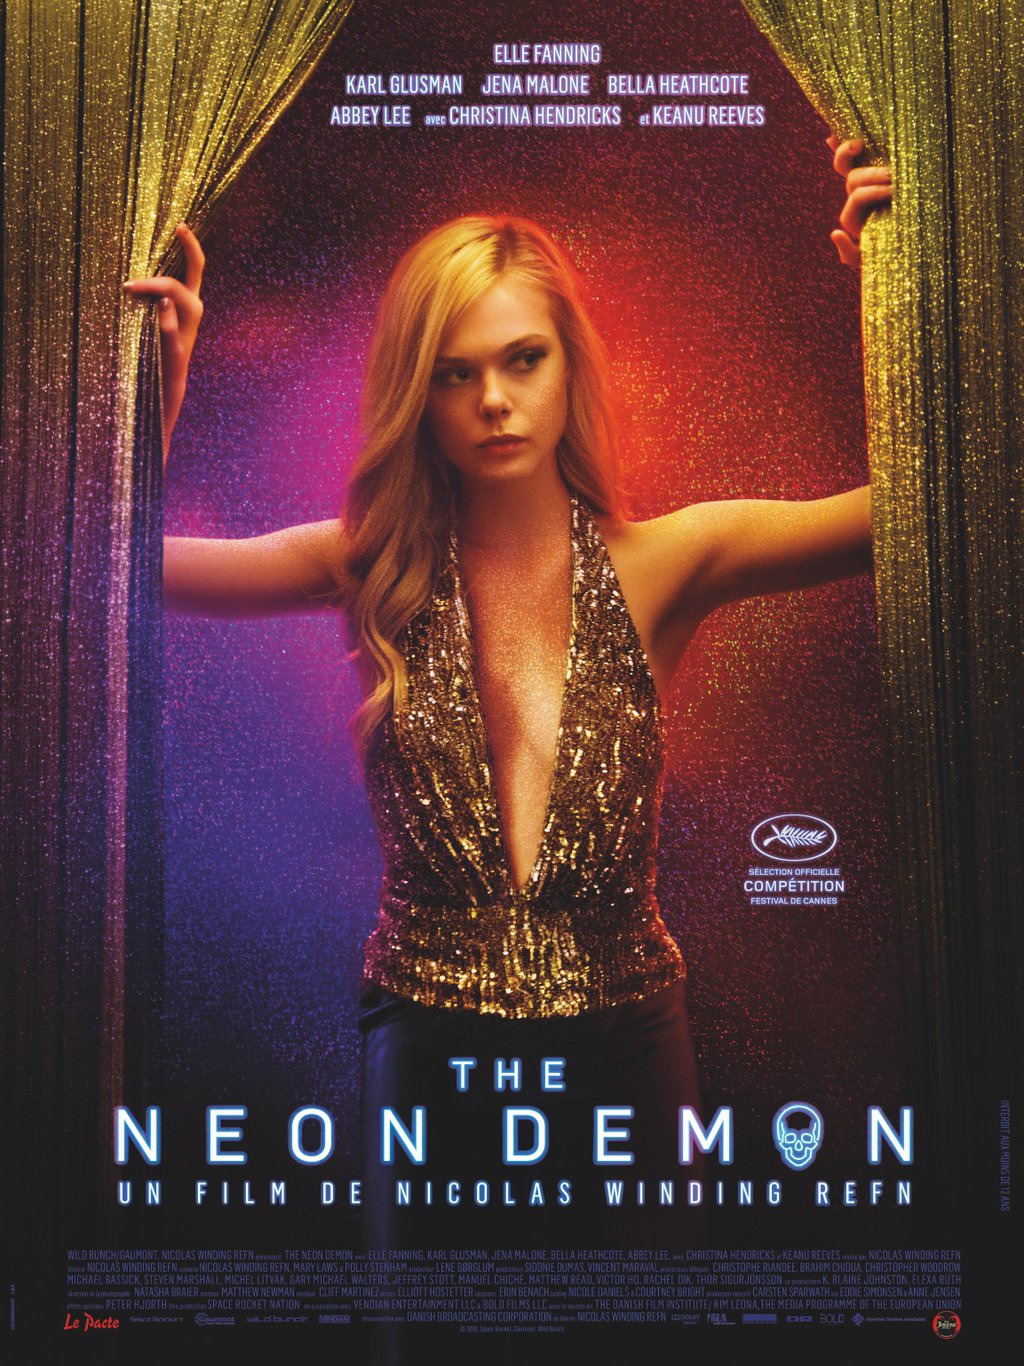 El demonio Neon (The Neon Demon) - Sinopcine - Lifetime Movies